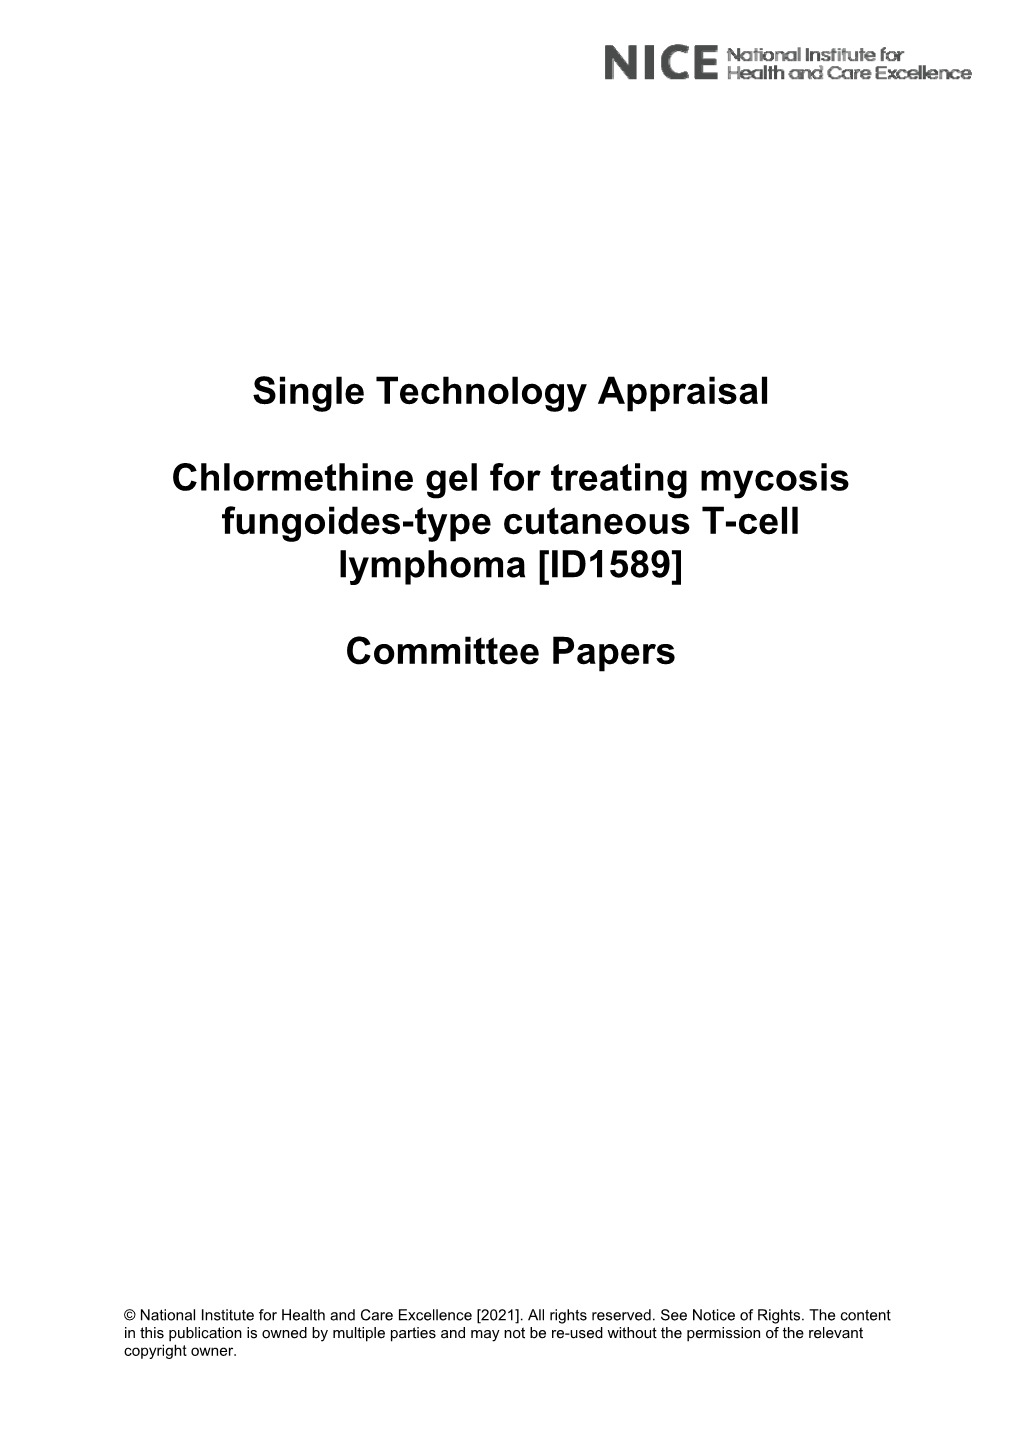 Single Technology Appraisal Chlormethine Gel for Treating